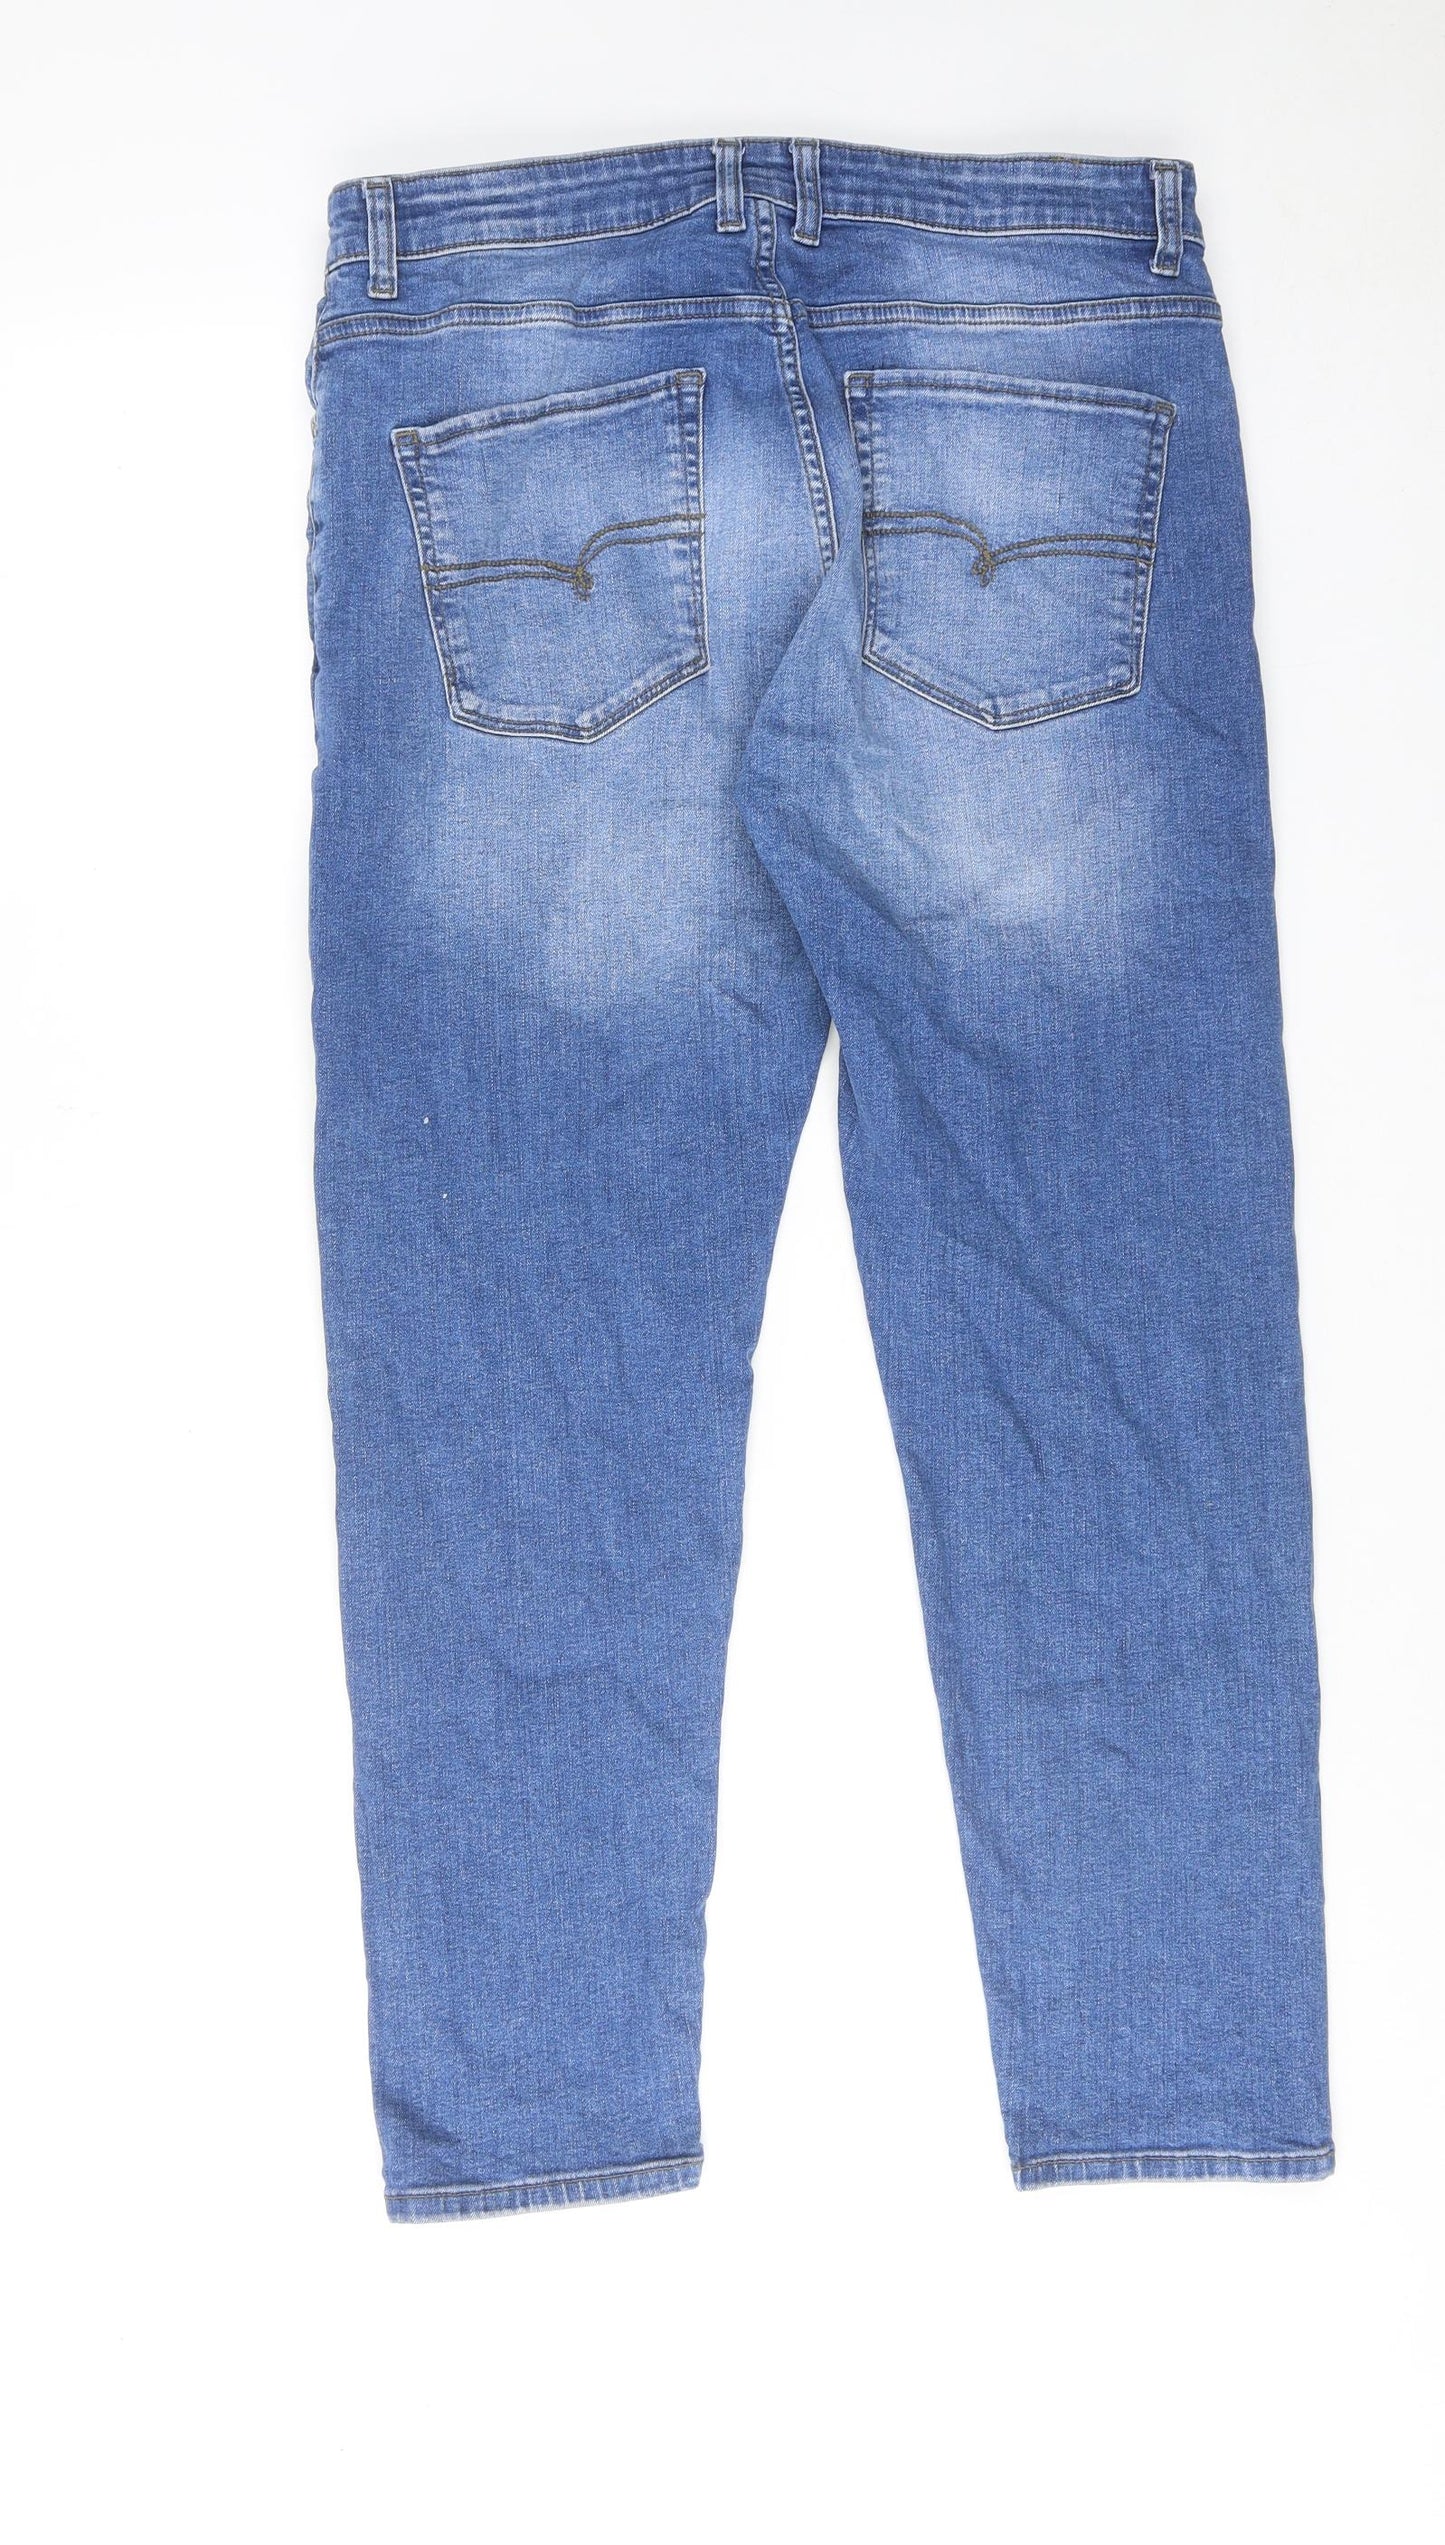 NEXT Mens Black Cotton Straight Jeans Size 34 in L29 in Slim Zip